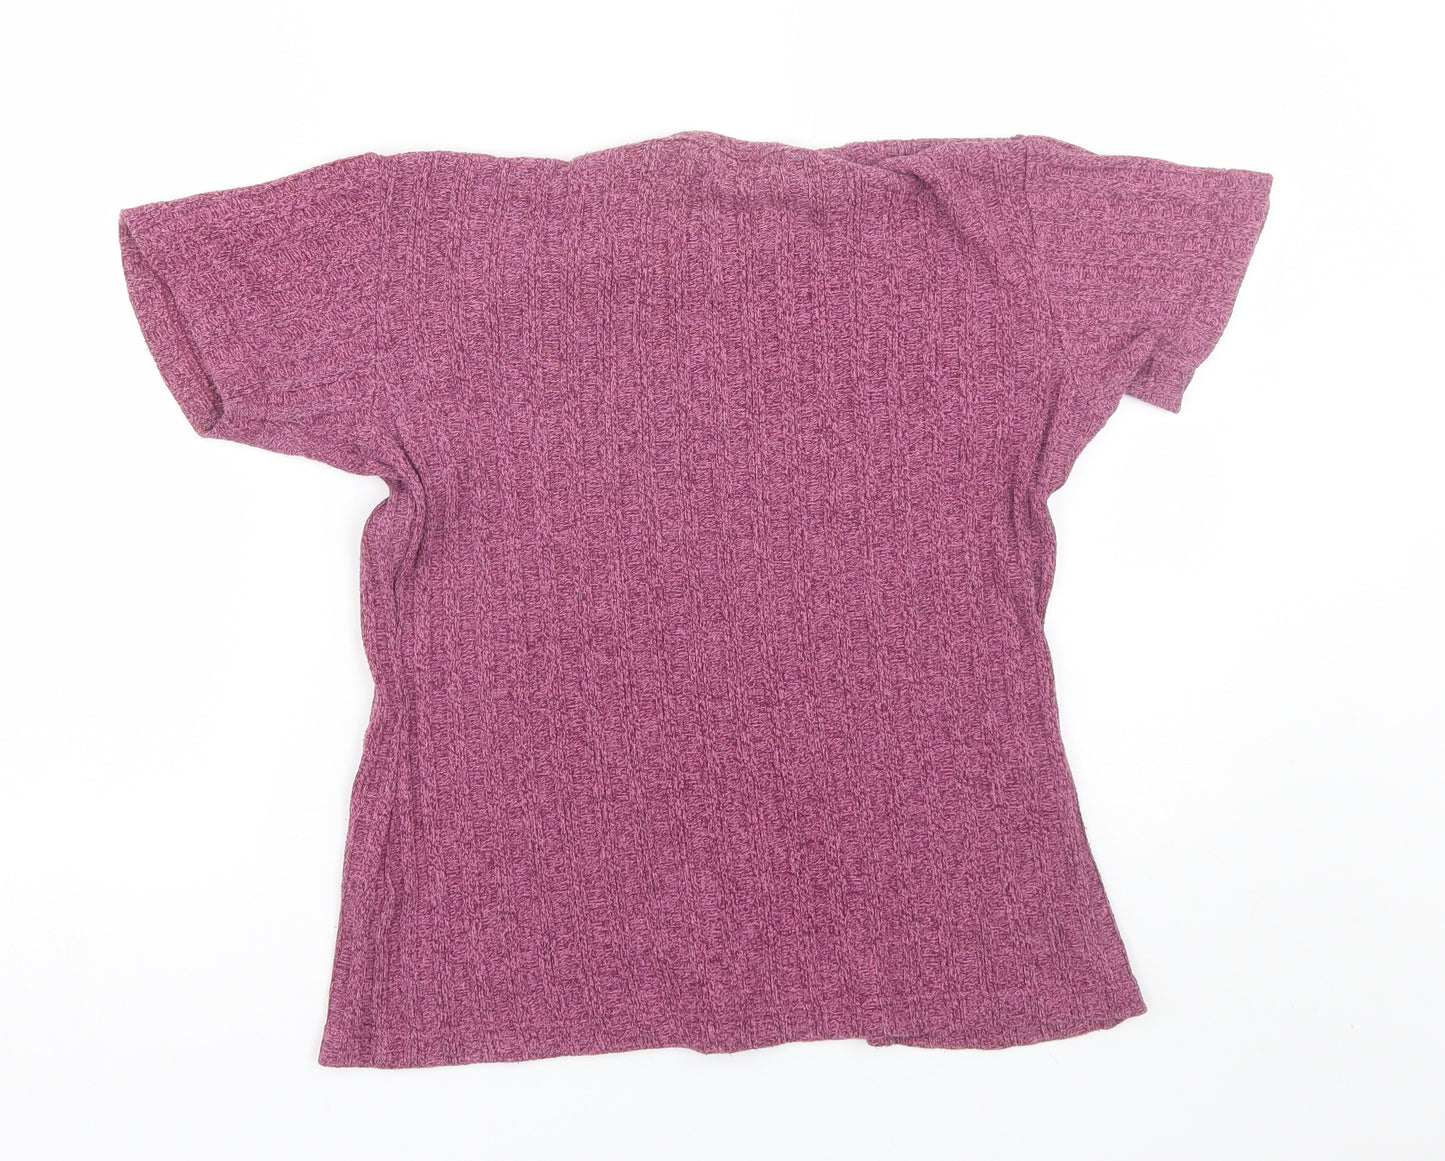 Patra Womens Purple   Basic T-Shirt Size L